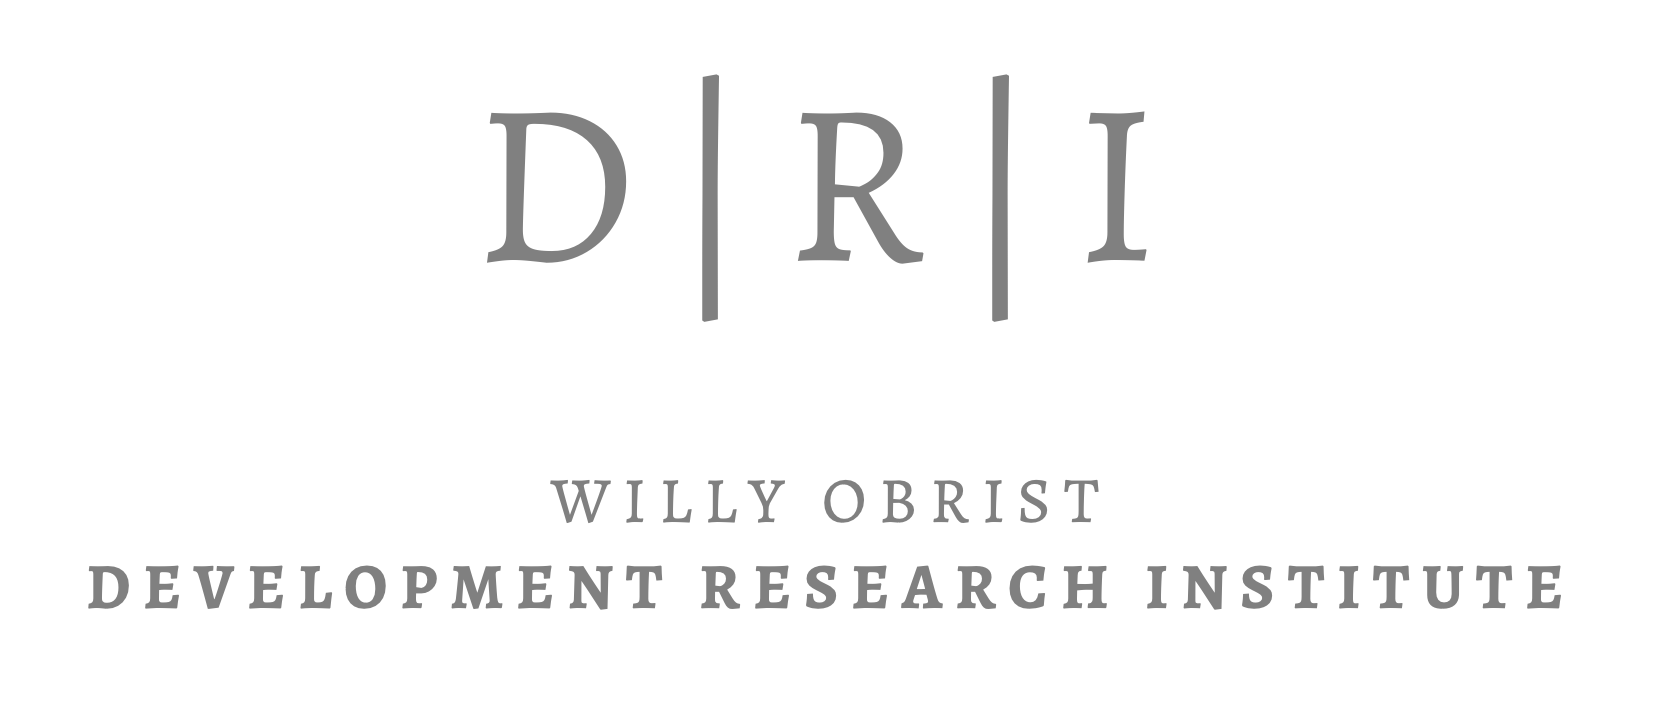 DRI News und DRI Blog